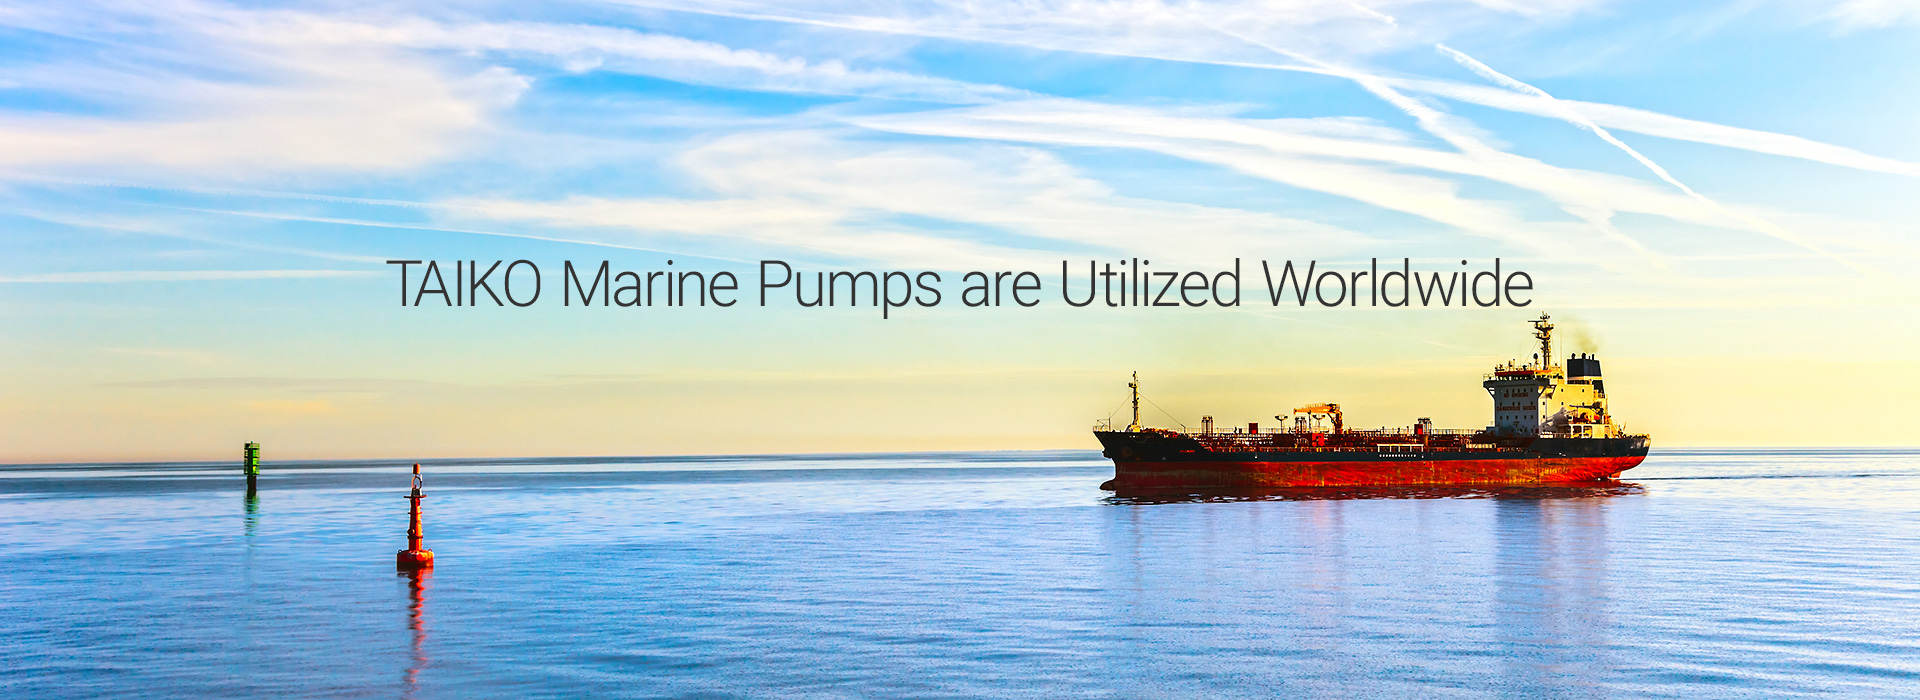 TAIKO Marine Pumps are Utilized Worldwide